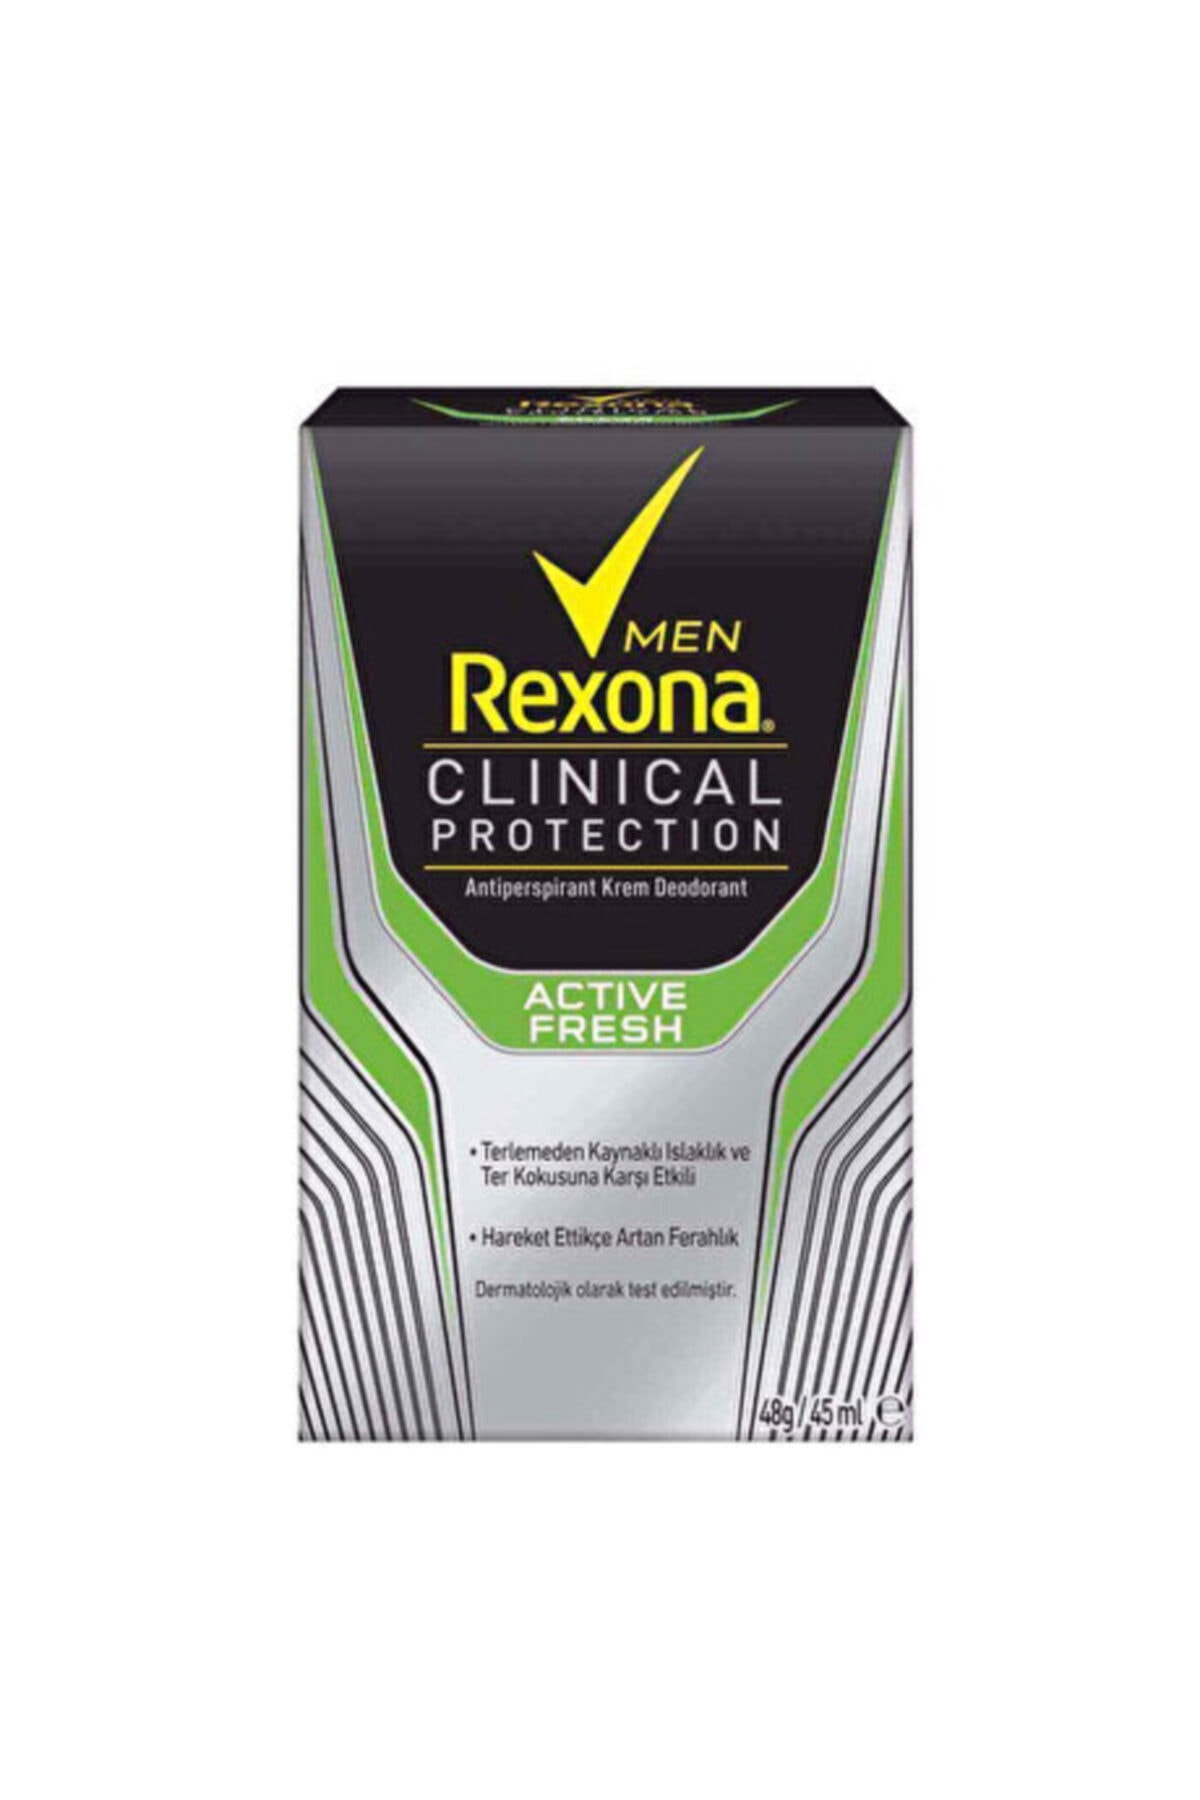 Rexona Krem Deodorant Clinical Protection Active Fresh Men 45 Ml